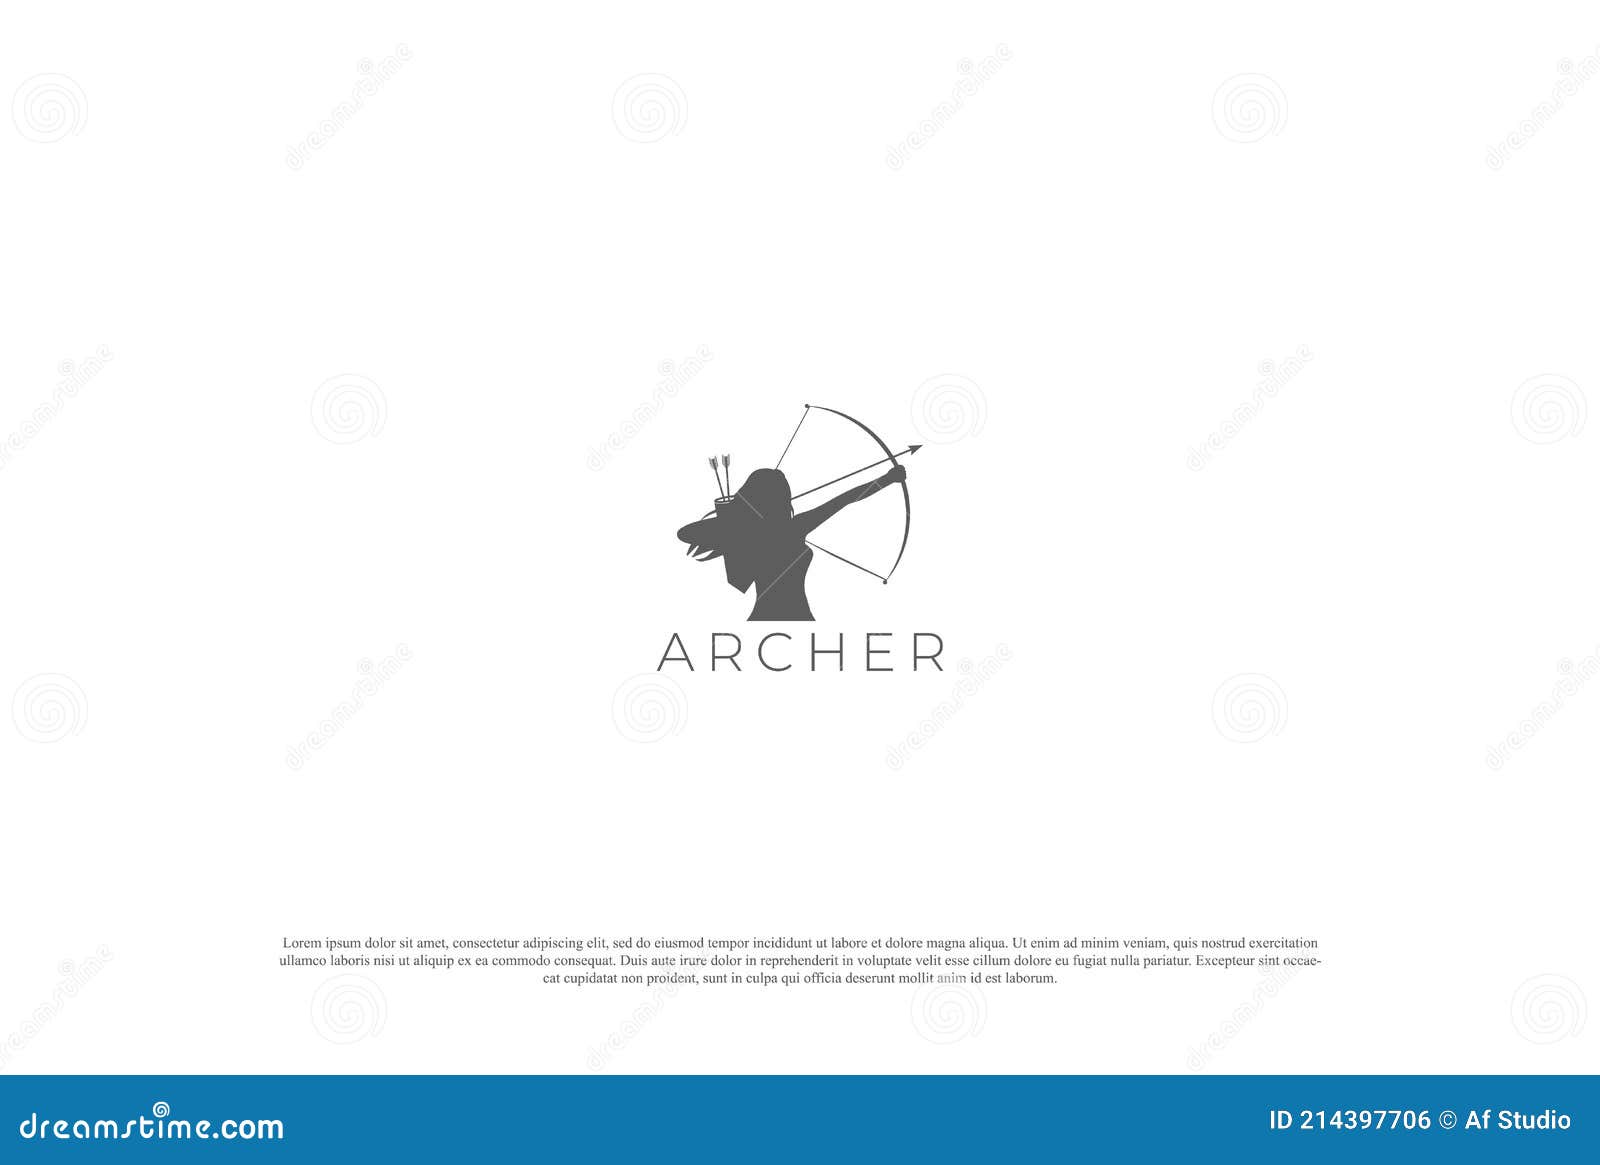 vintage woman archer for archery sport club logo  